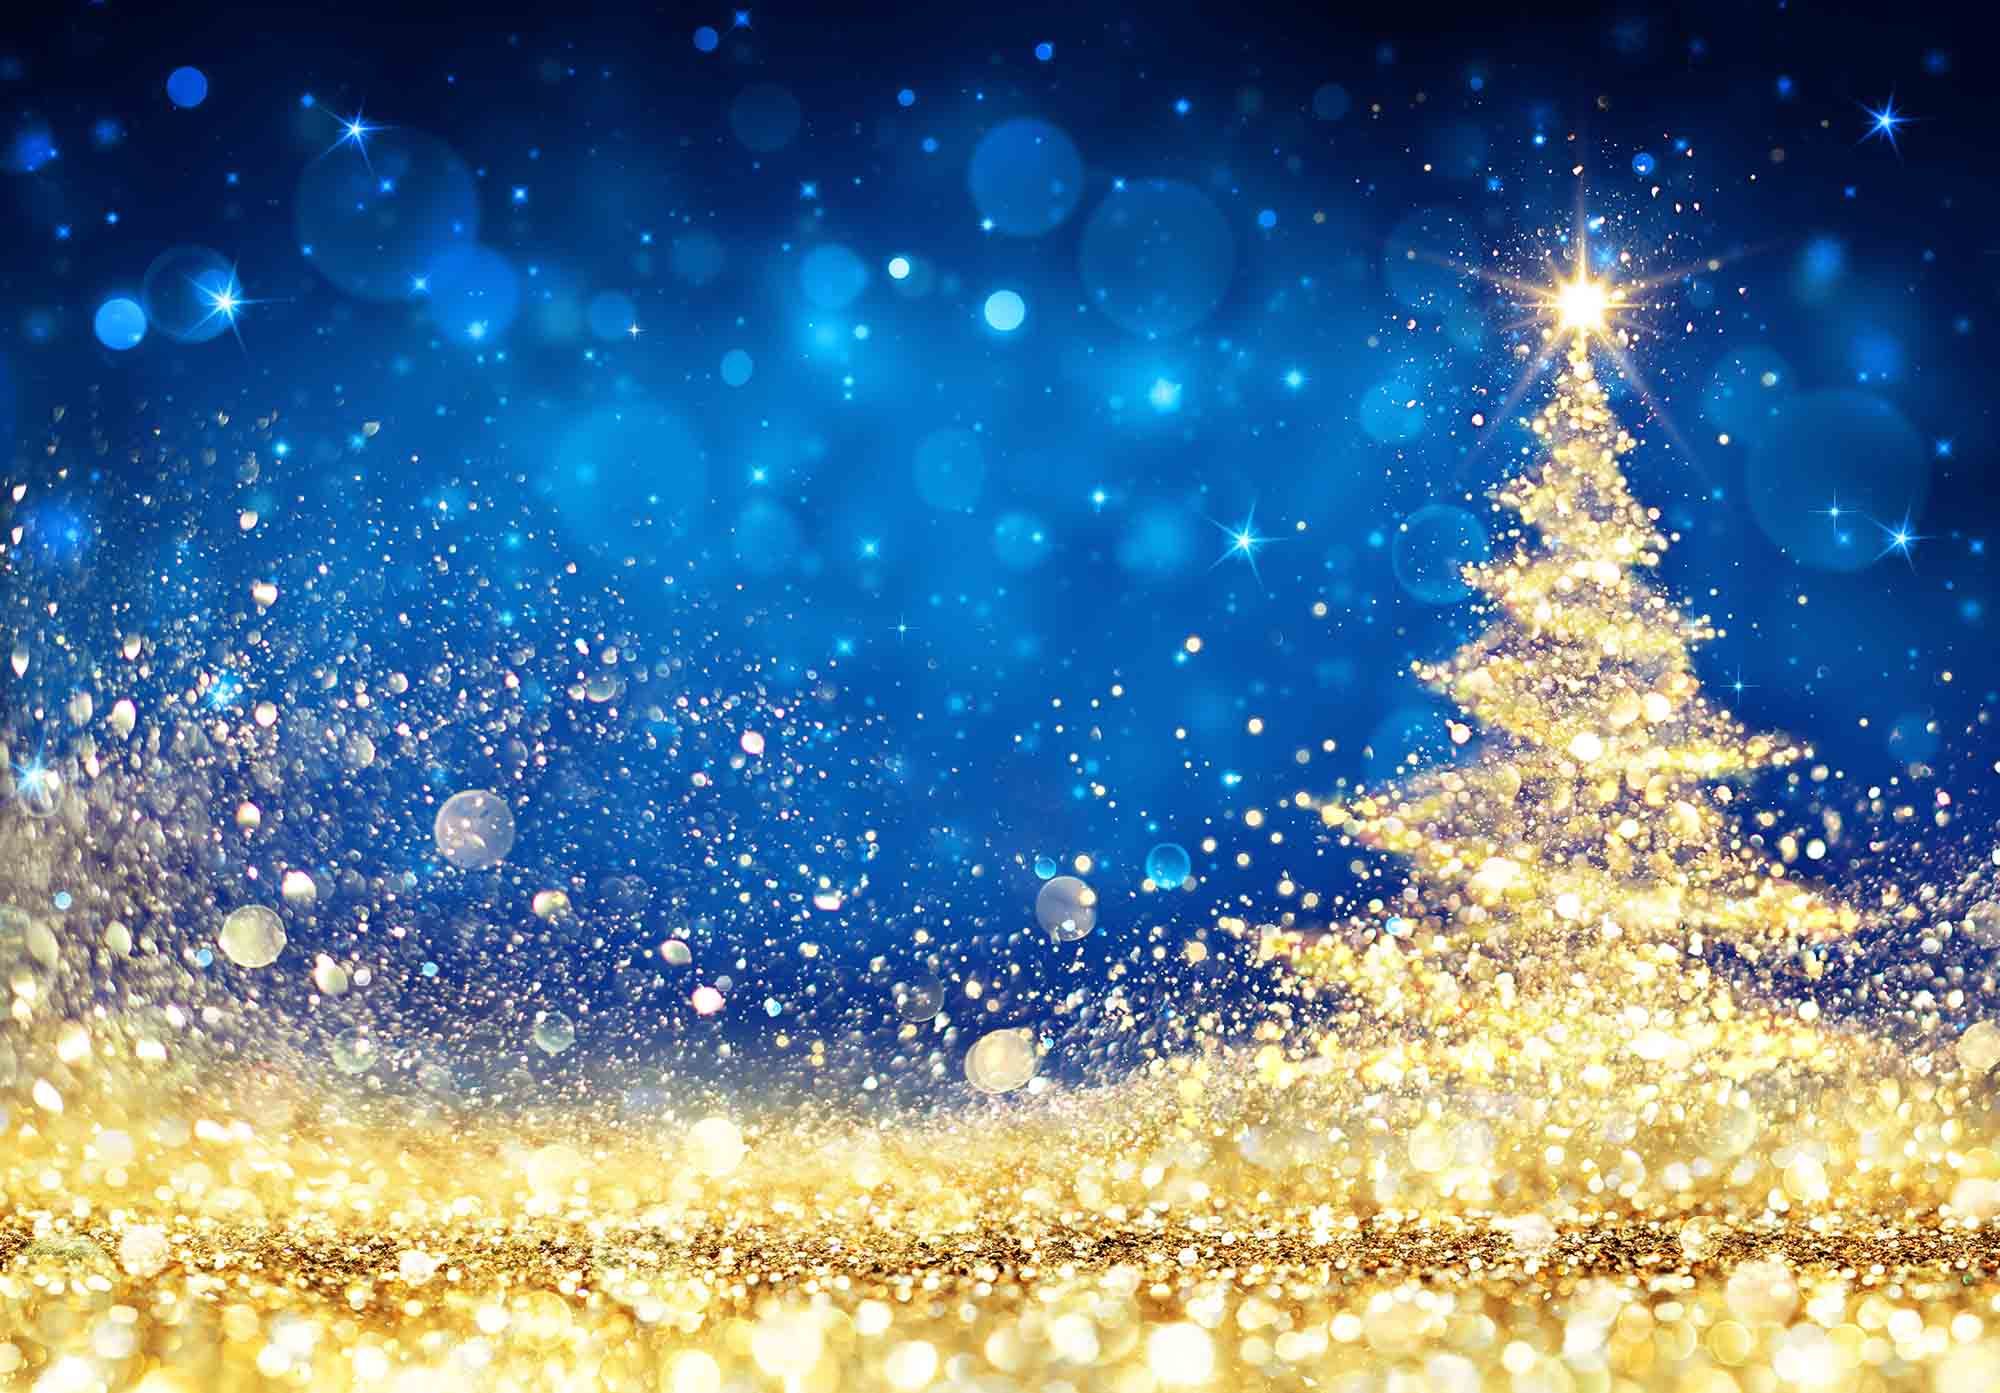 Shiny Christmas Tree - Golden Dust Glittering In The Blue Background Backdrop Shopbackdrop